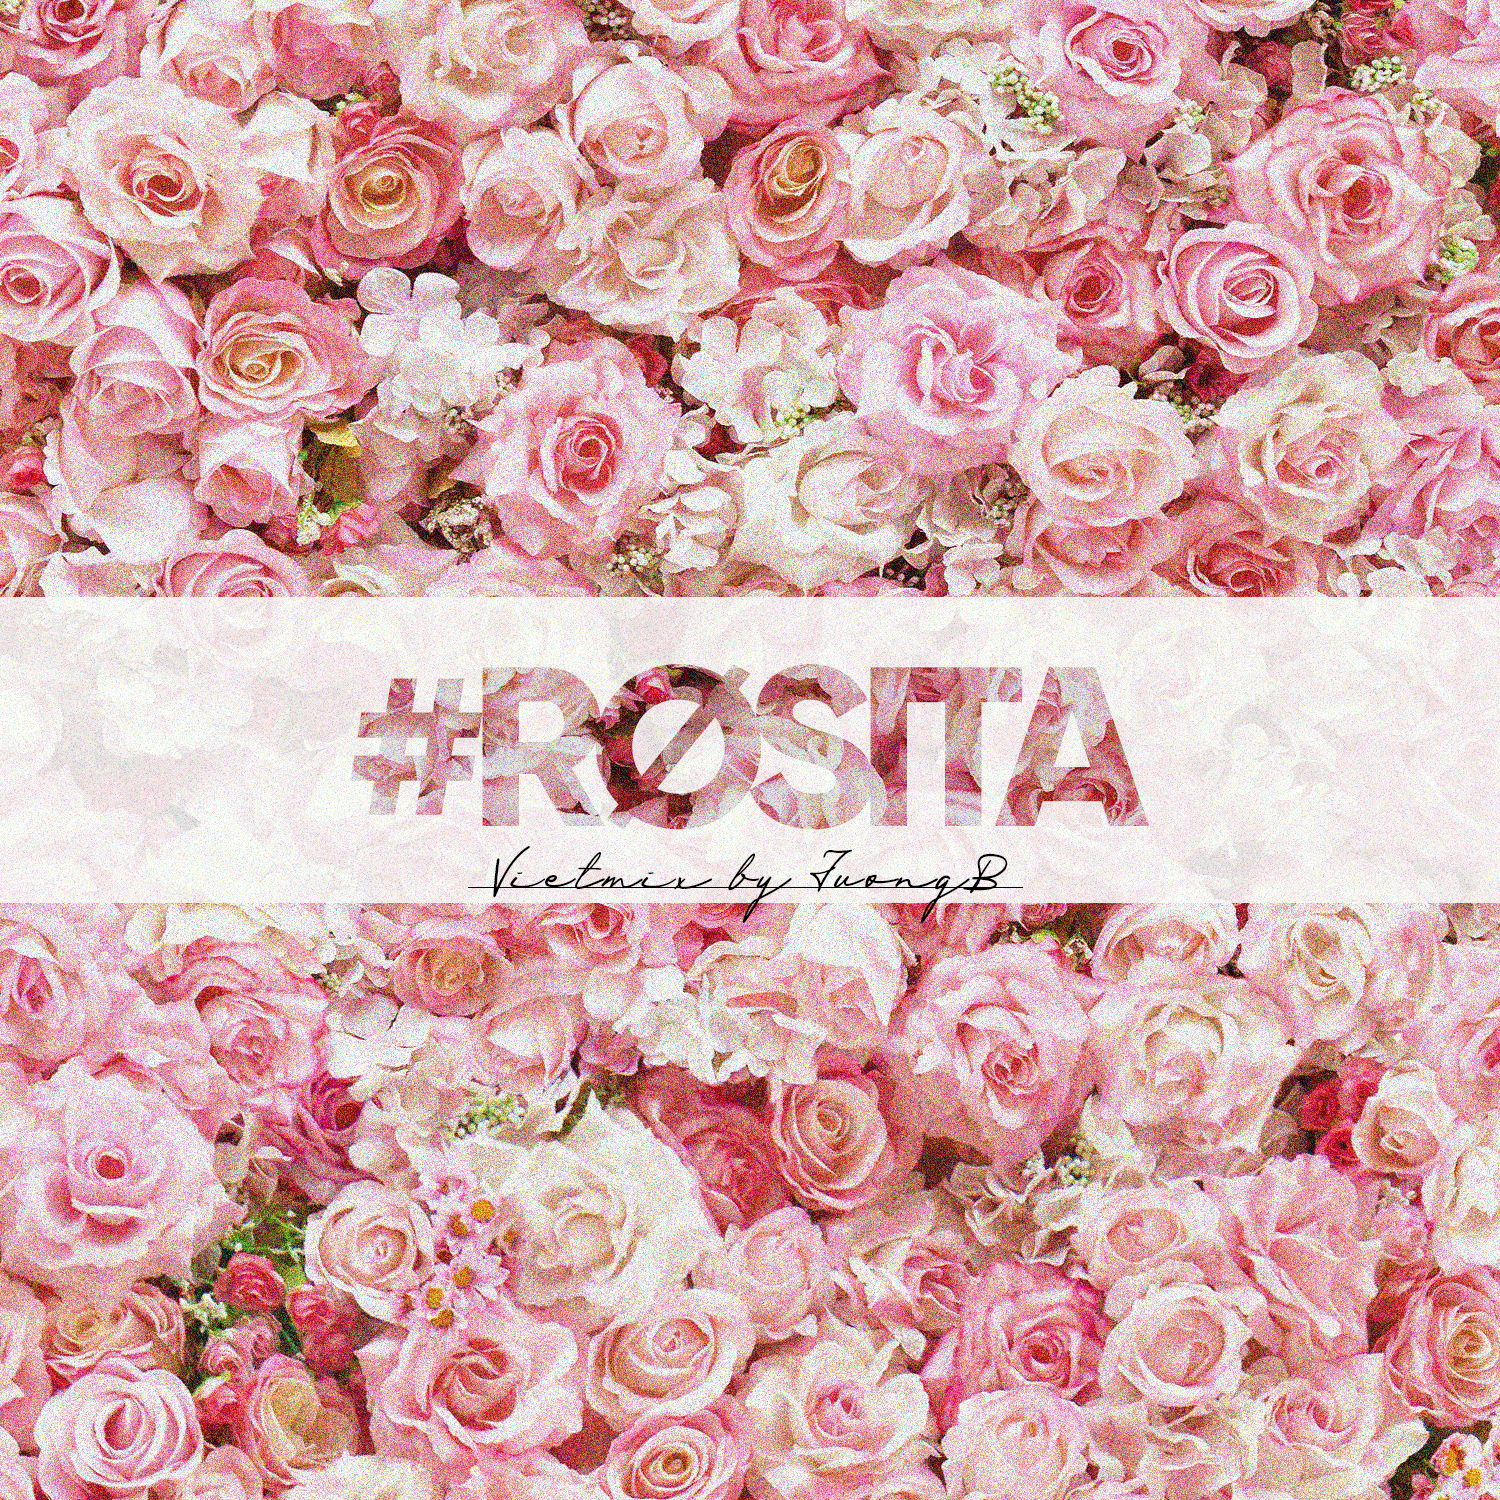 डाउनलोड करा #Rosita - Vietmix By JuongB